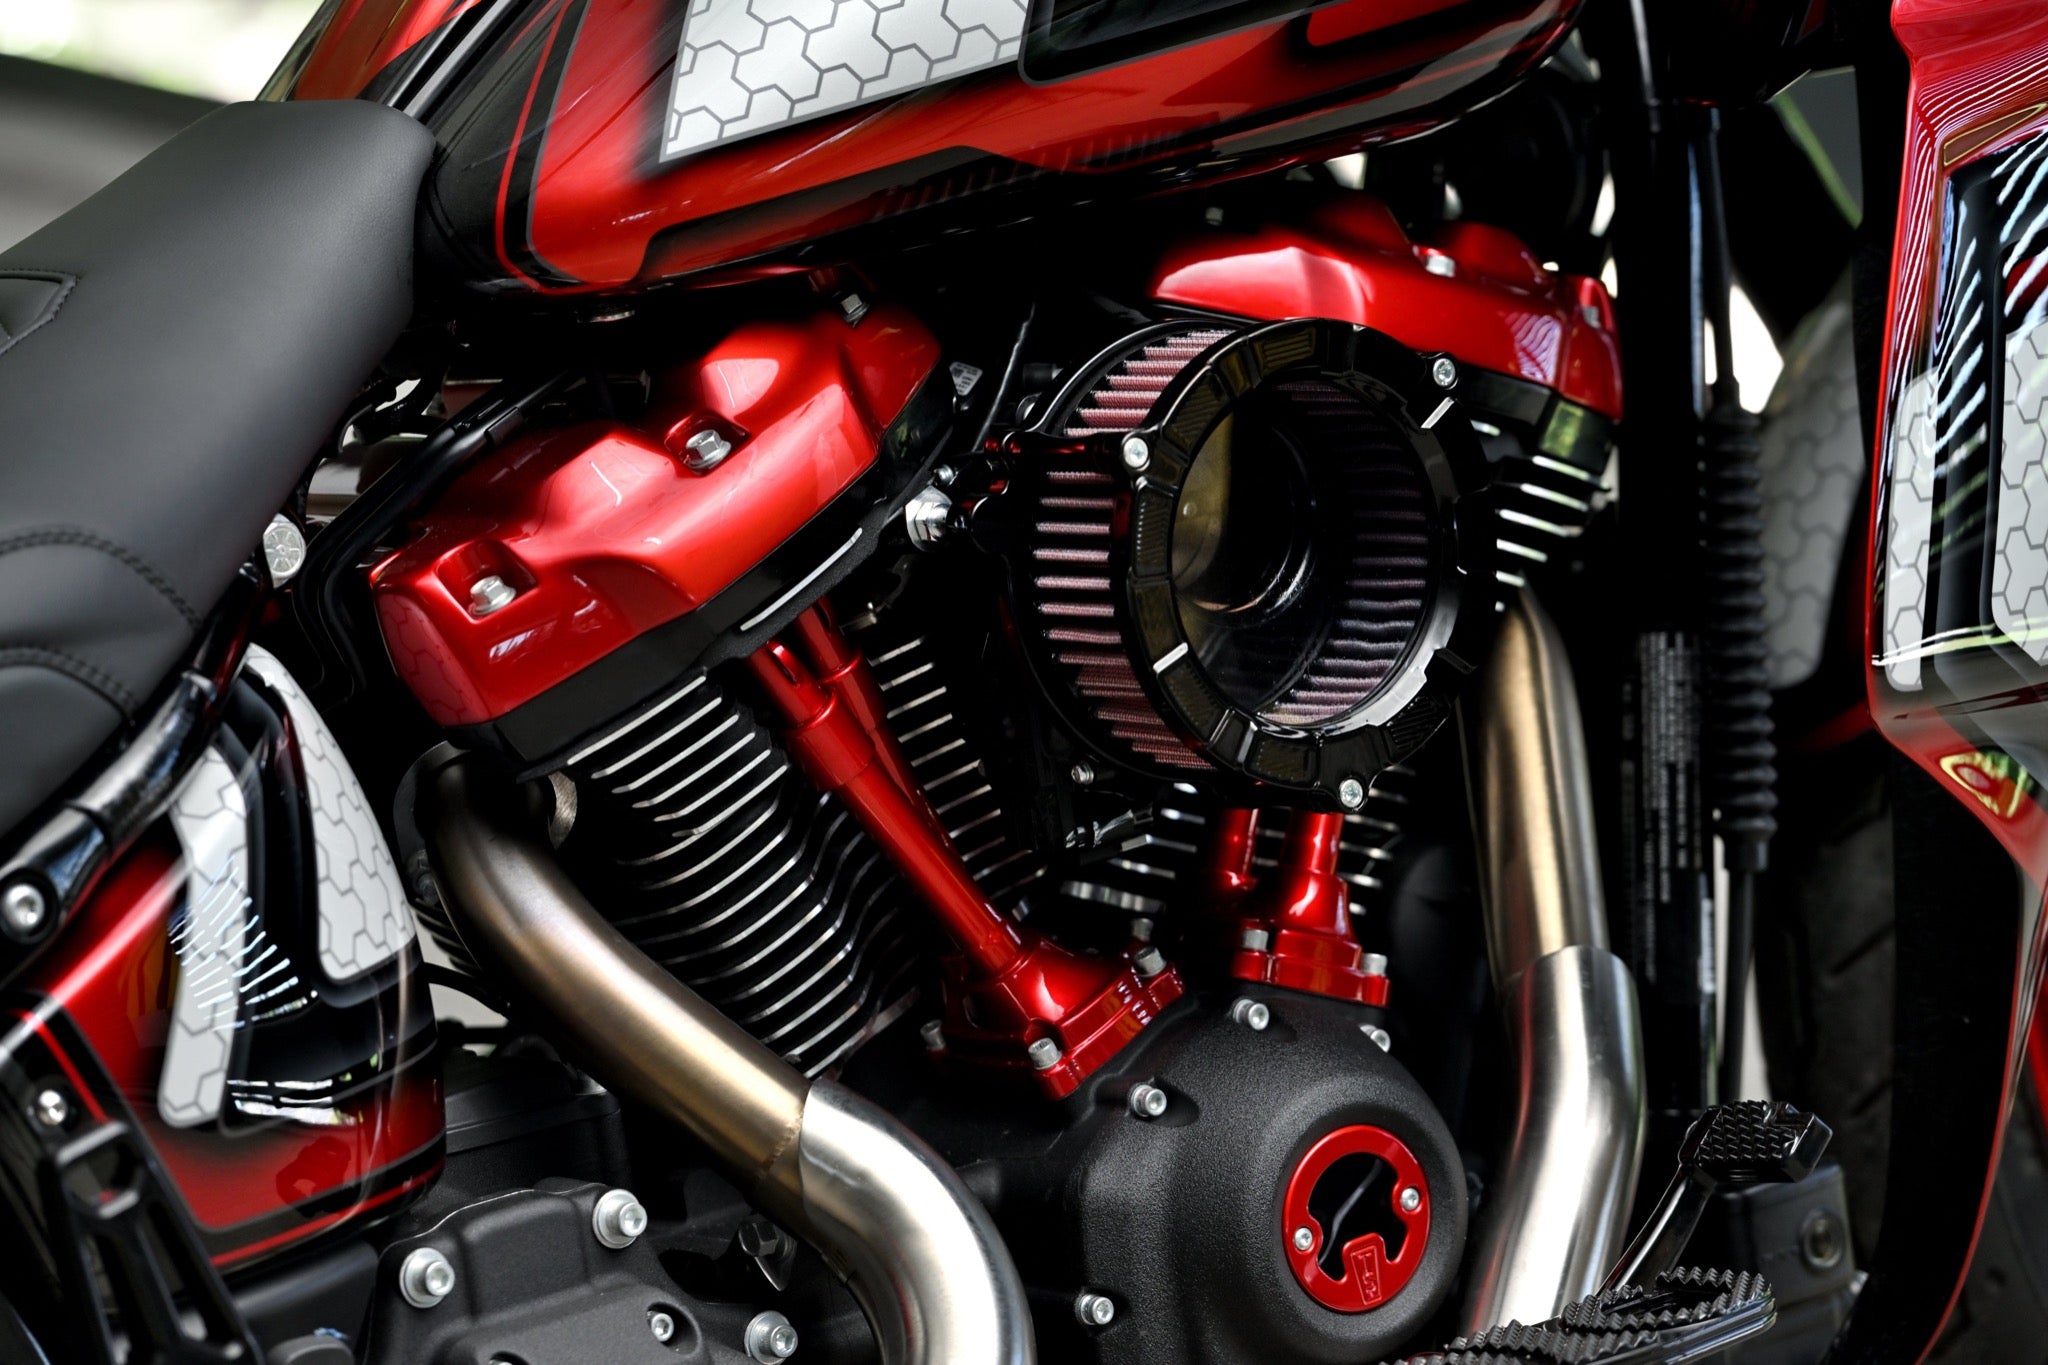 Harley Davidson Milwaukee-8 Touring, Softail Transparent air filter red